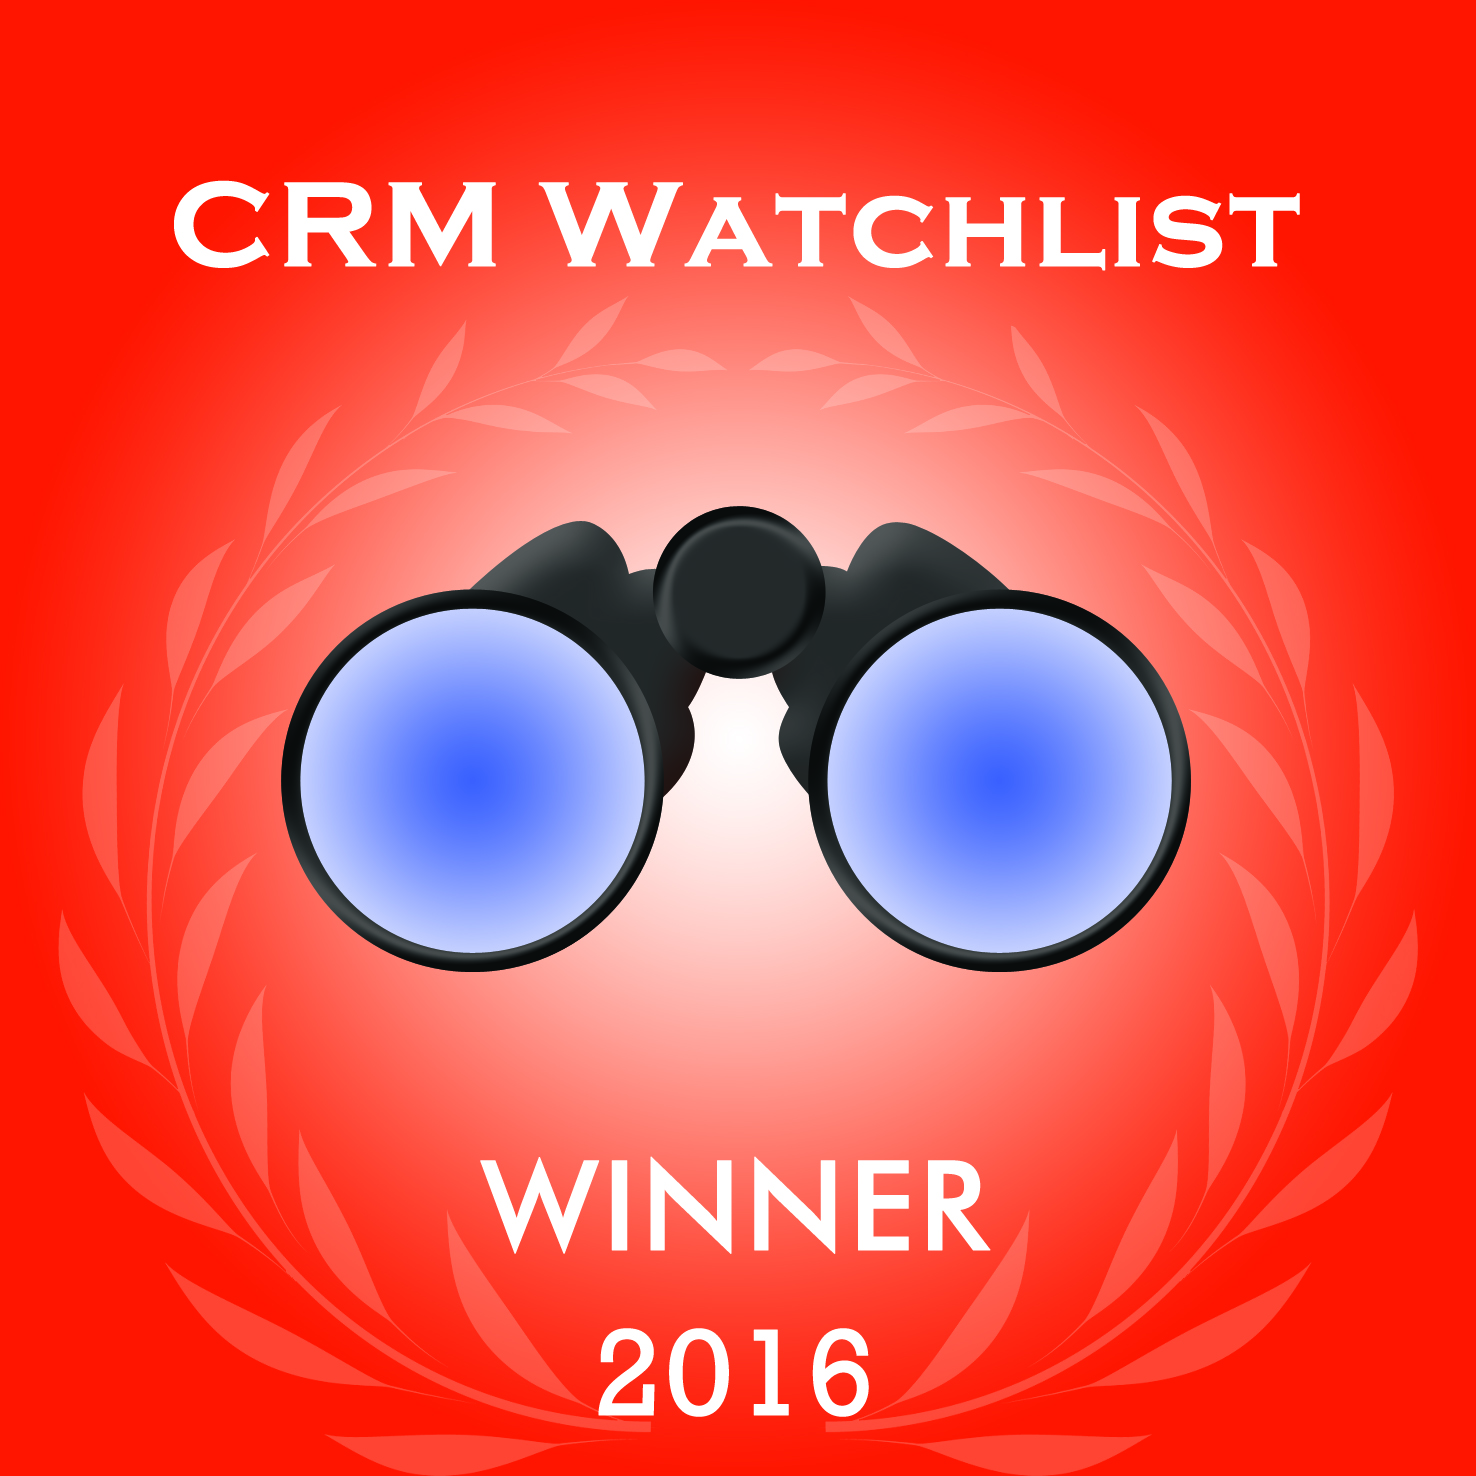 HubSpot Named Winner of 2016 CRM Watchlist